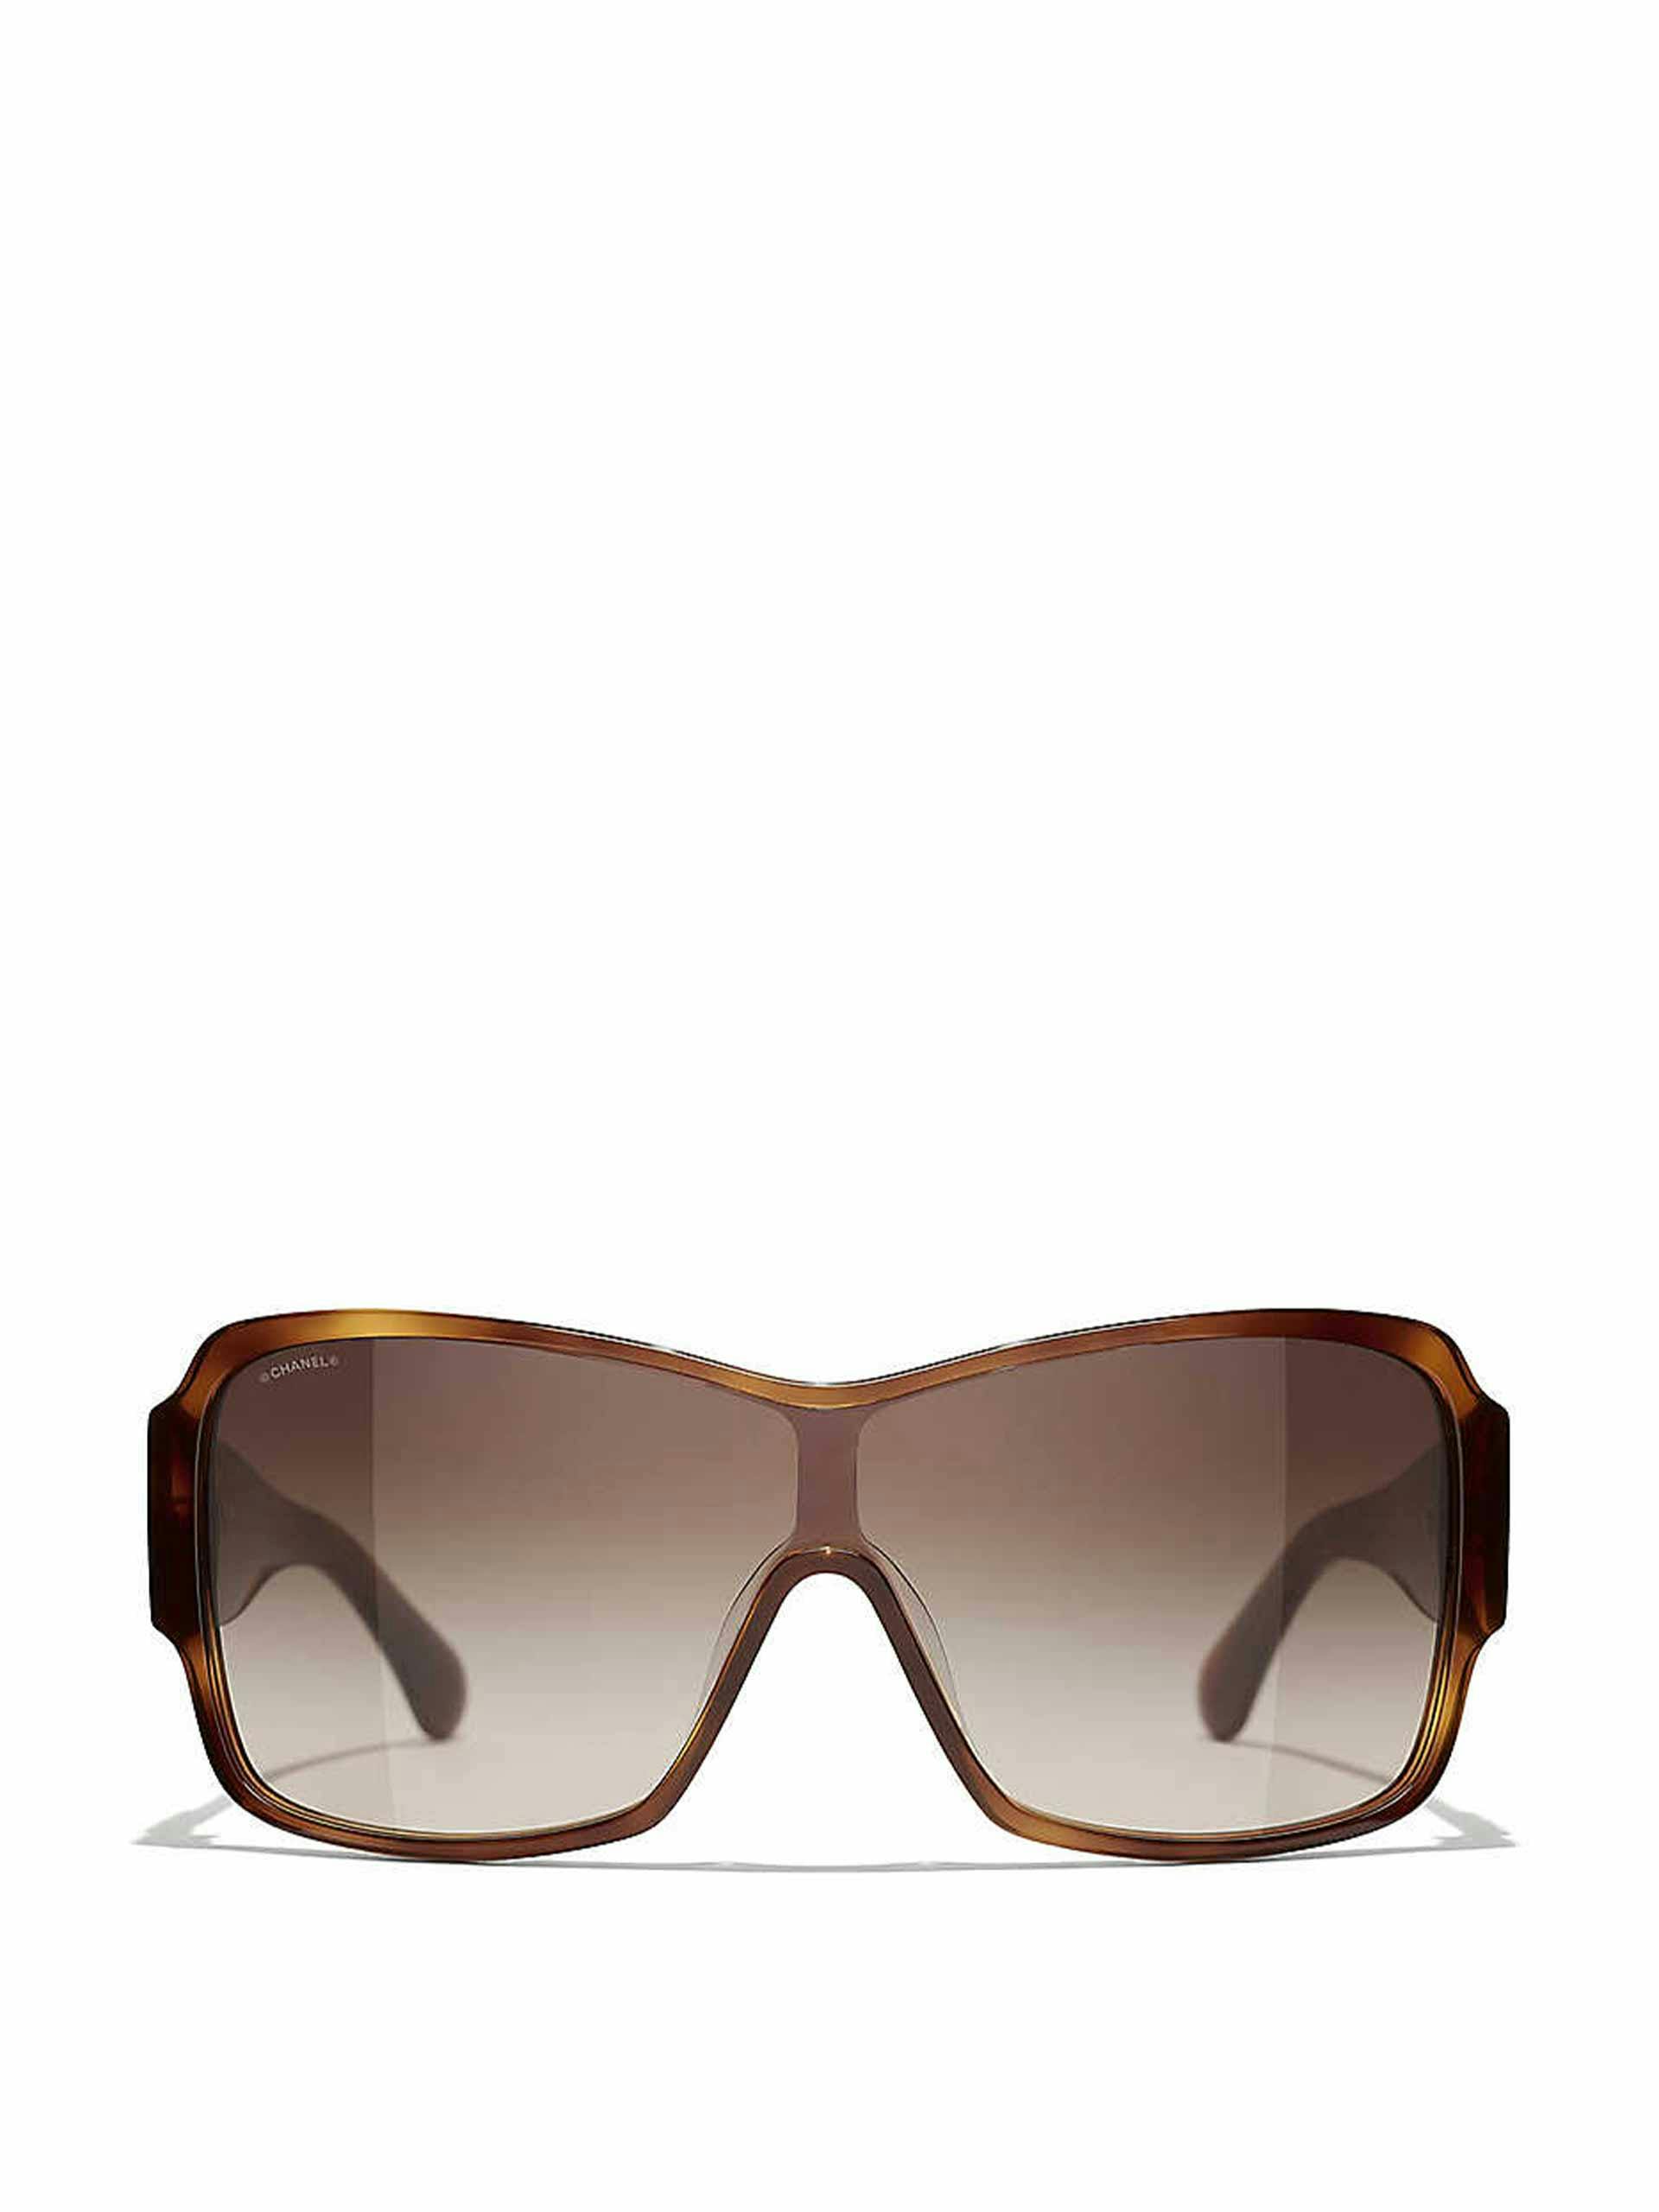 Brown square-frame sunglasses